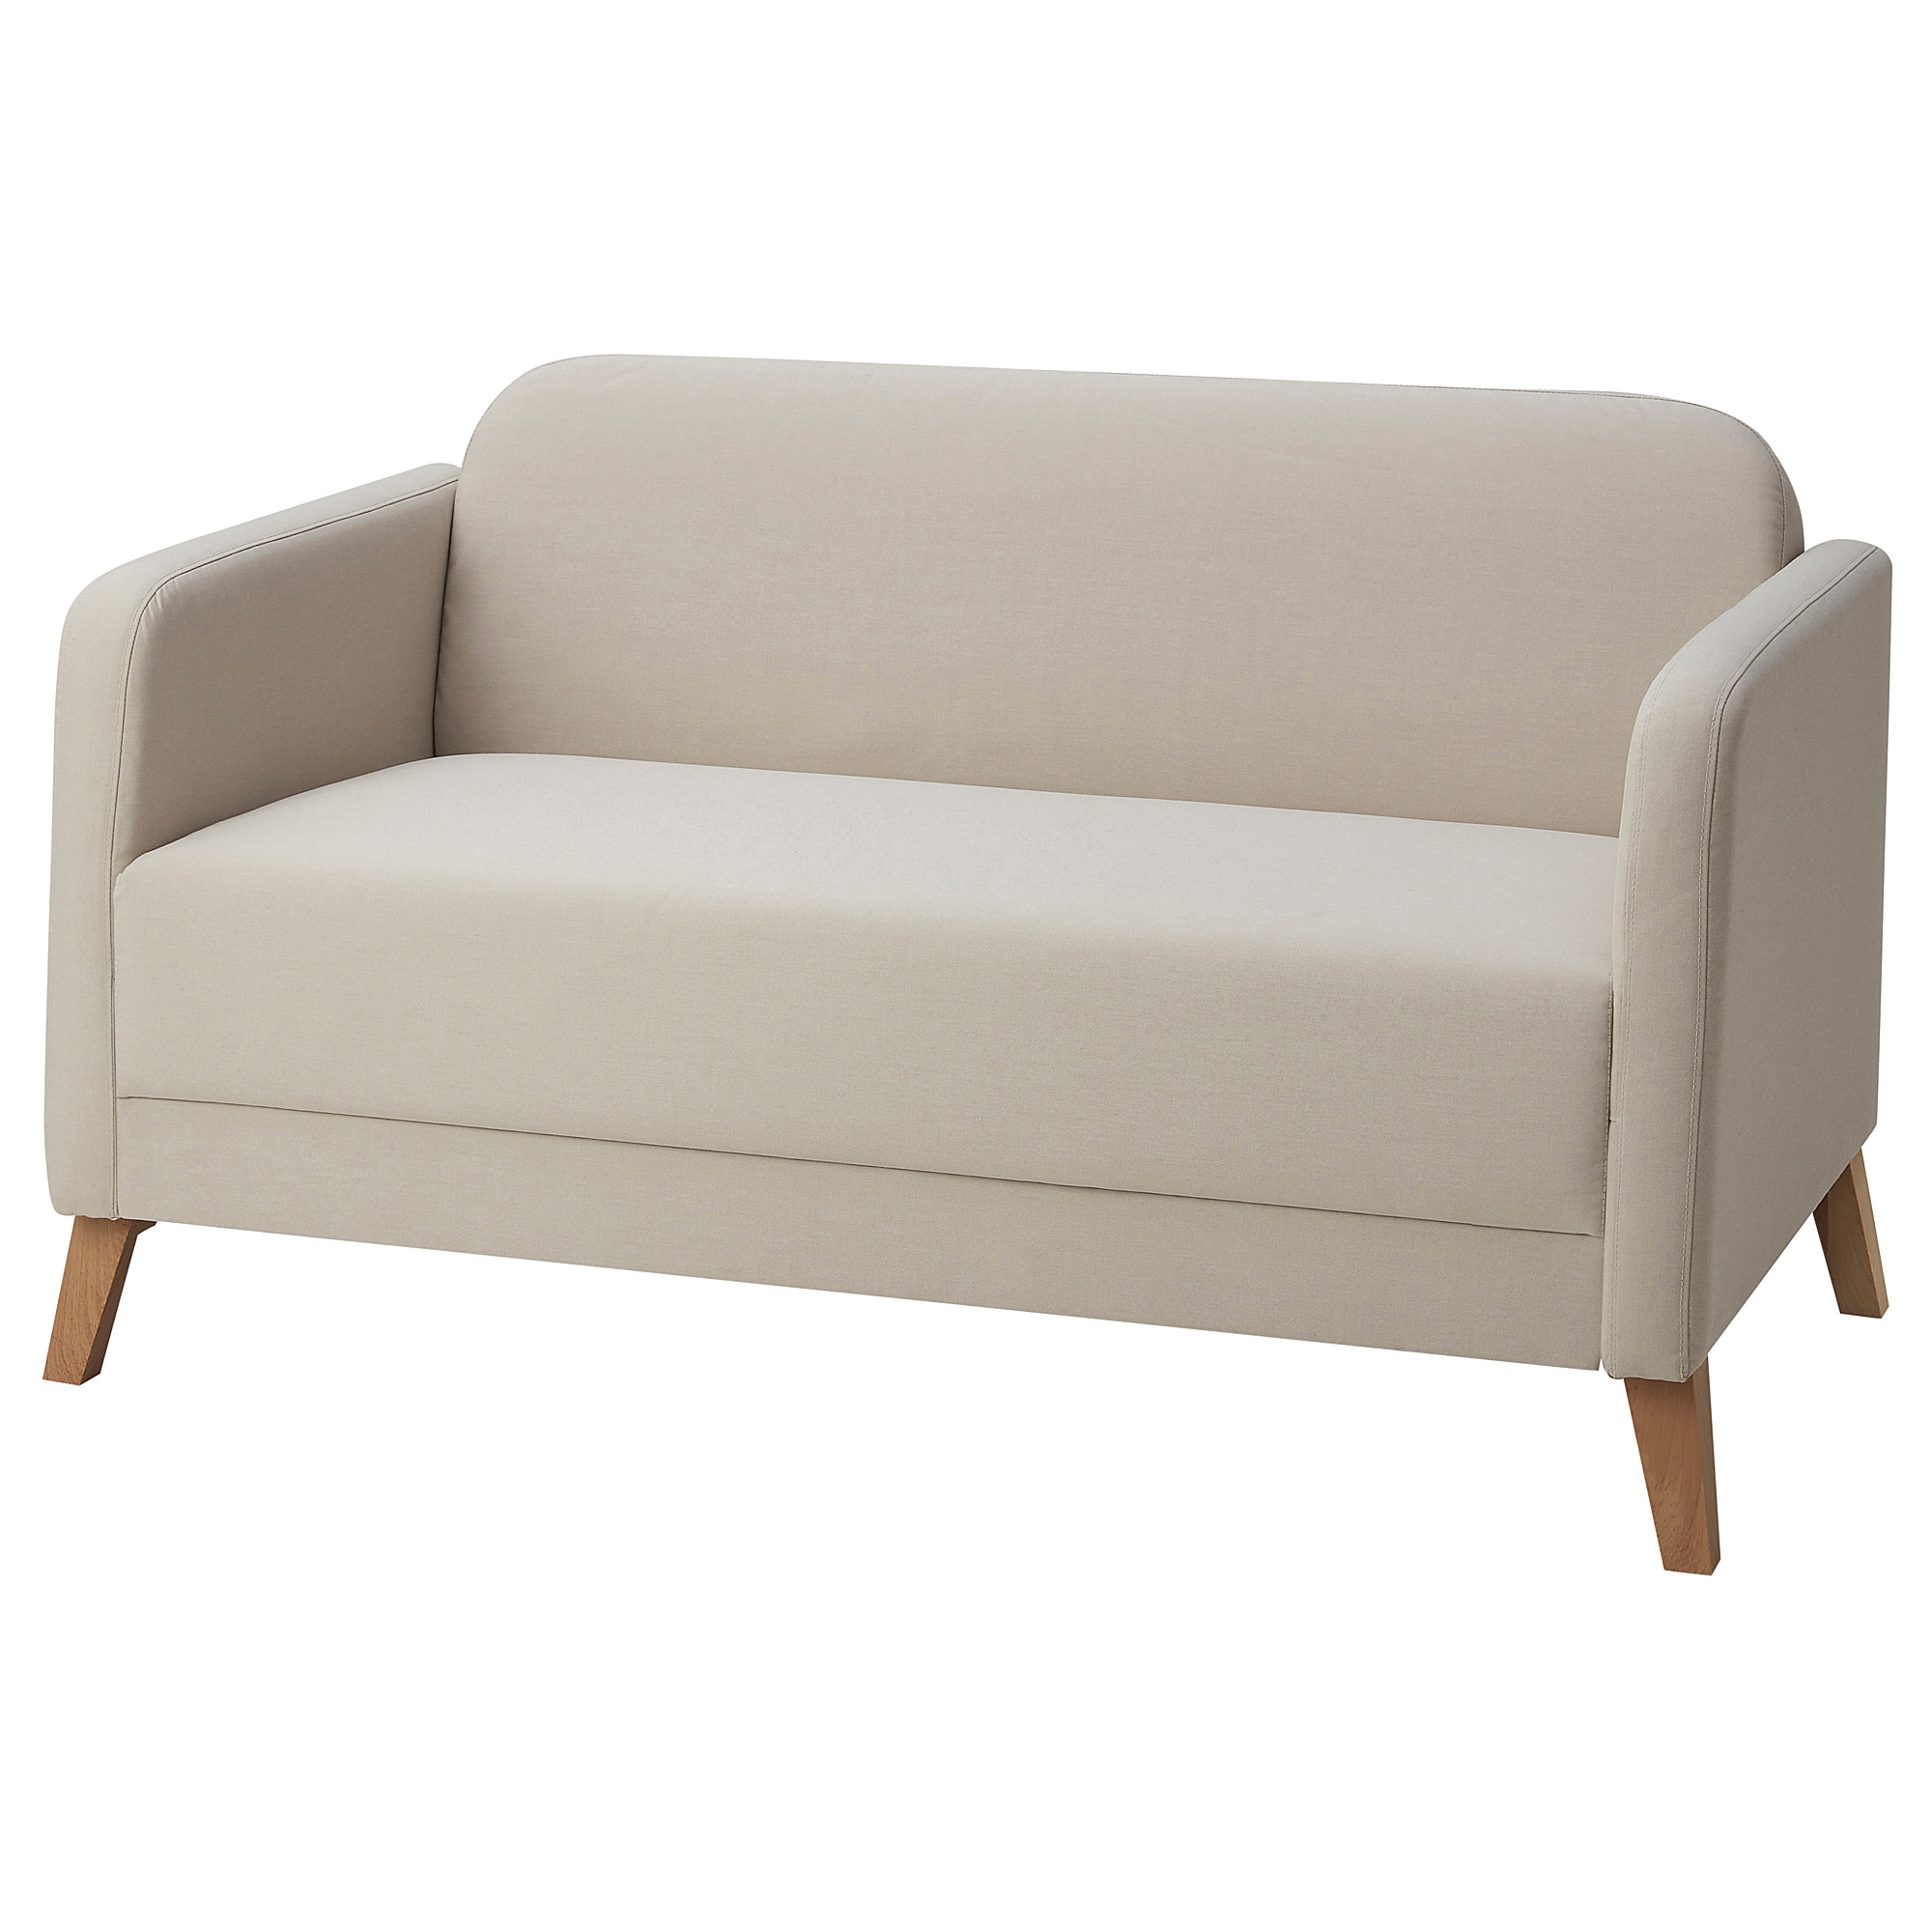 LINANÄS 2-seat sofa